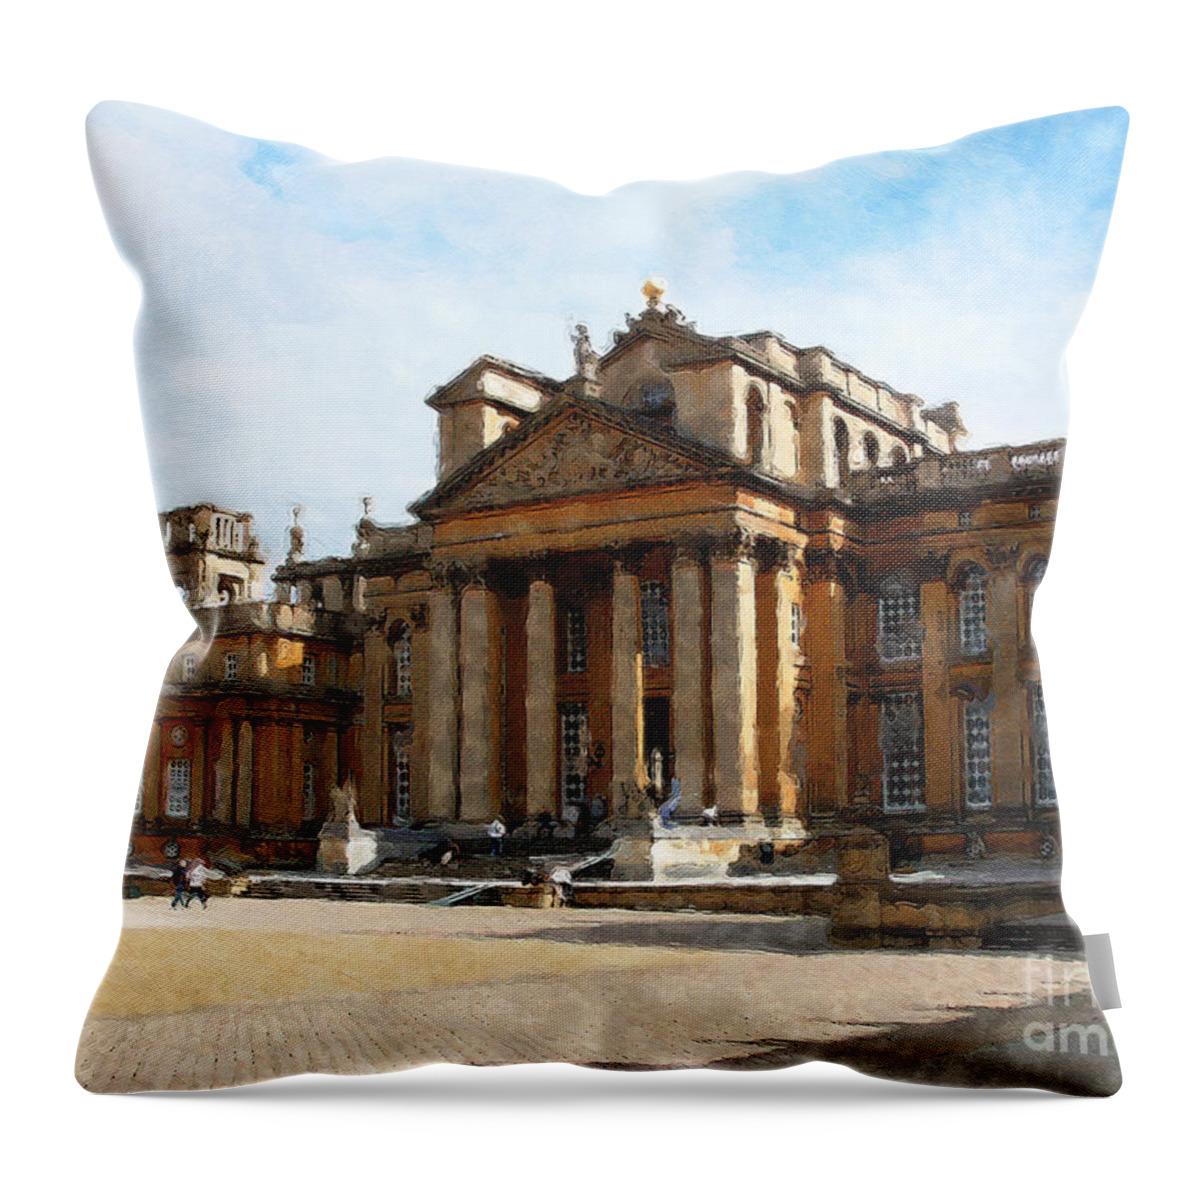 Blenheim Palace Throw Pillow featuring the photograph Blenheim Palace Too by Brian Watt